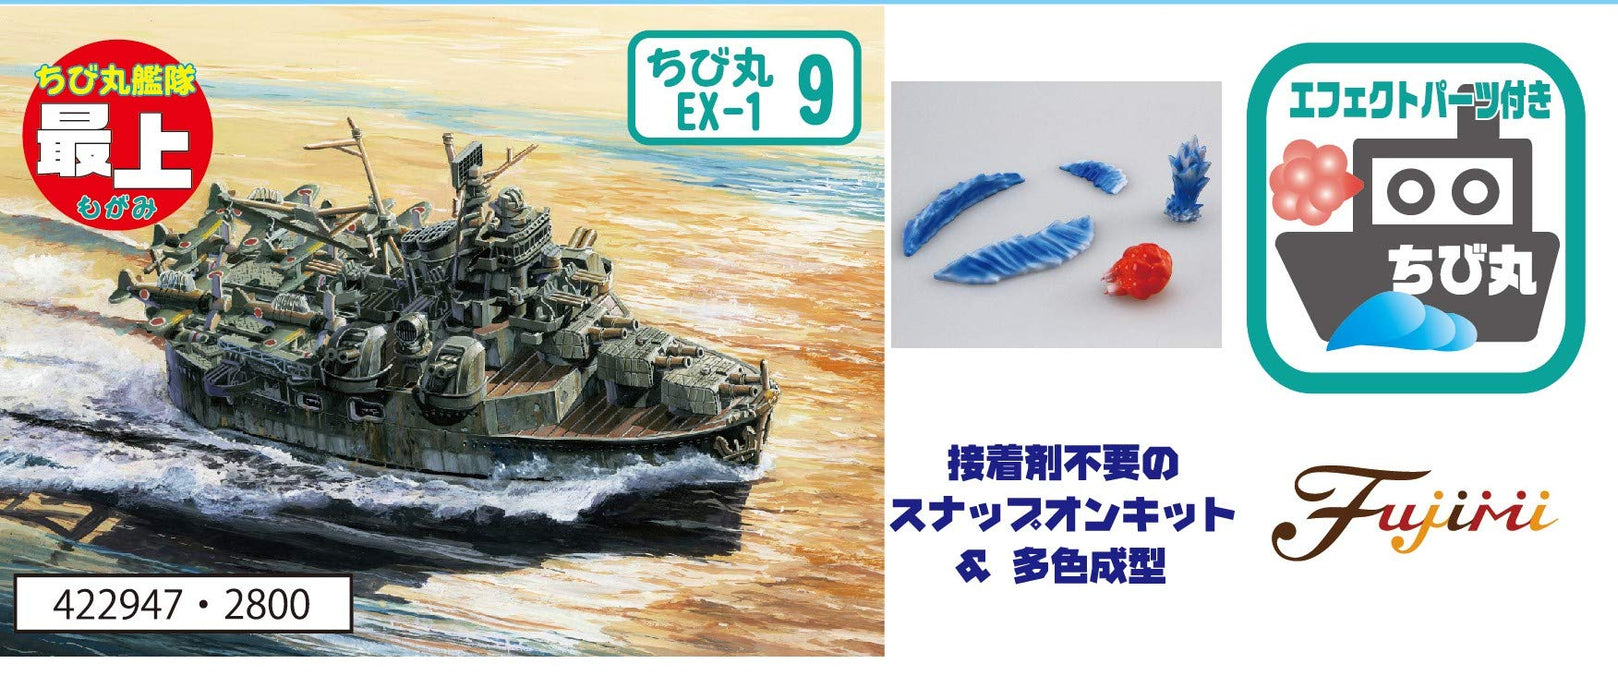 Fujimi 9Ex-1 Chibi-Maru Fleet Mogami Sp. Ver W/ Effect Parts Japanese Non-Scale Model